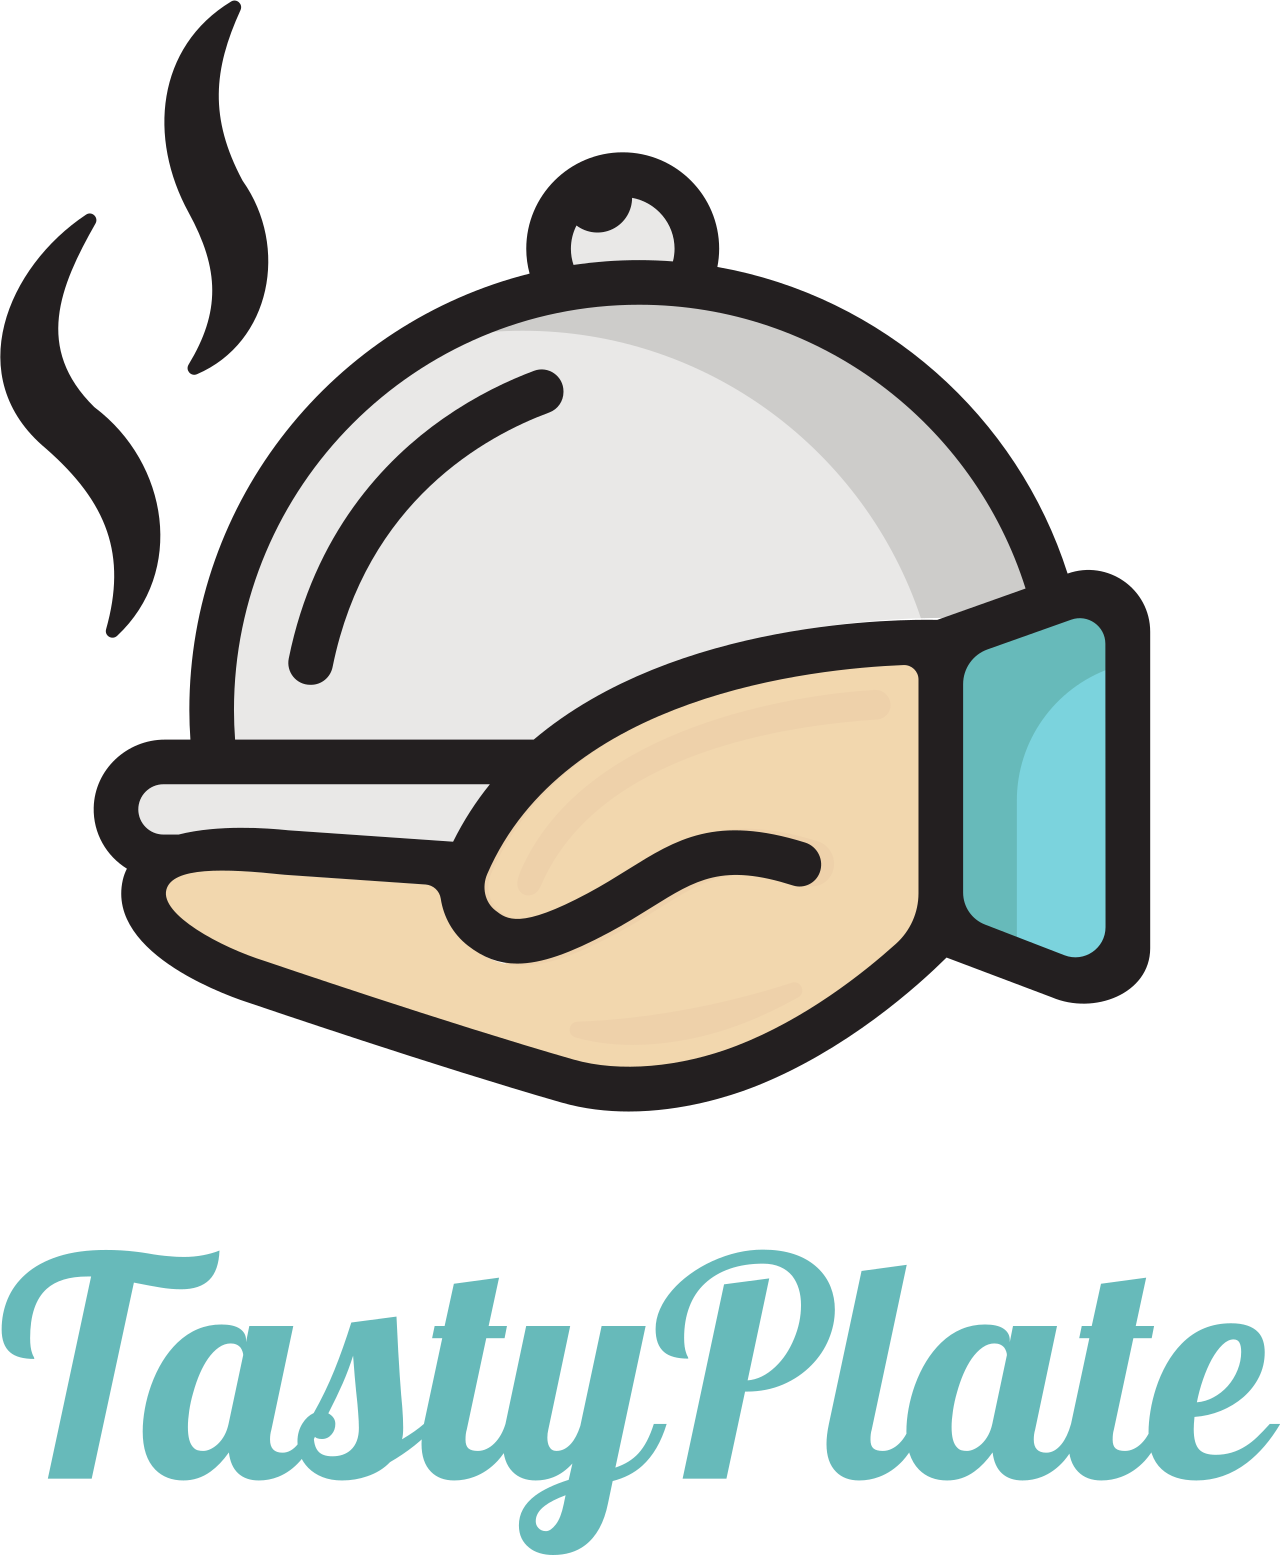 TastyPlate's logo